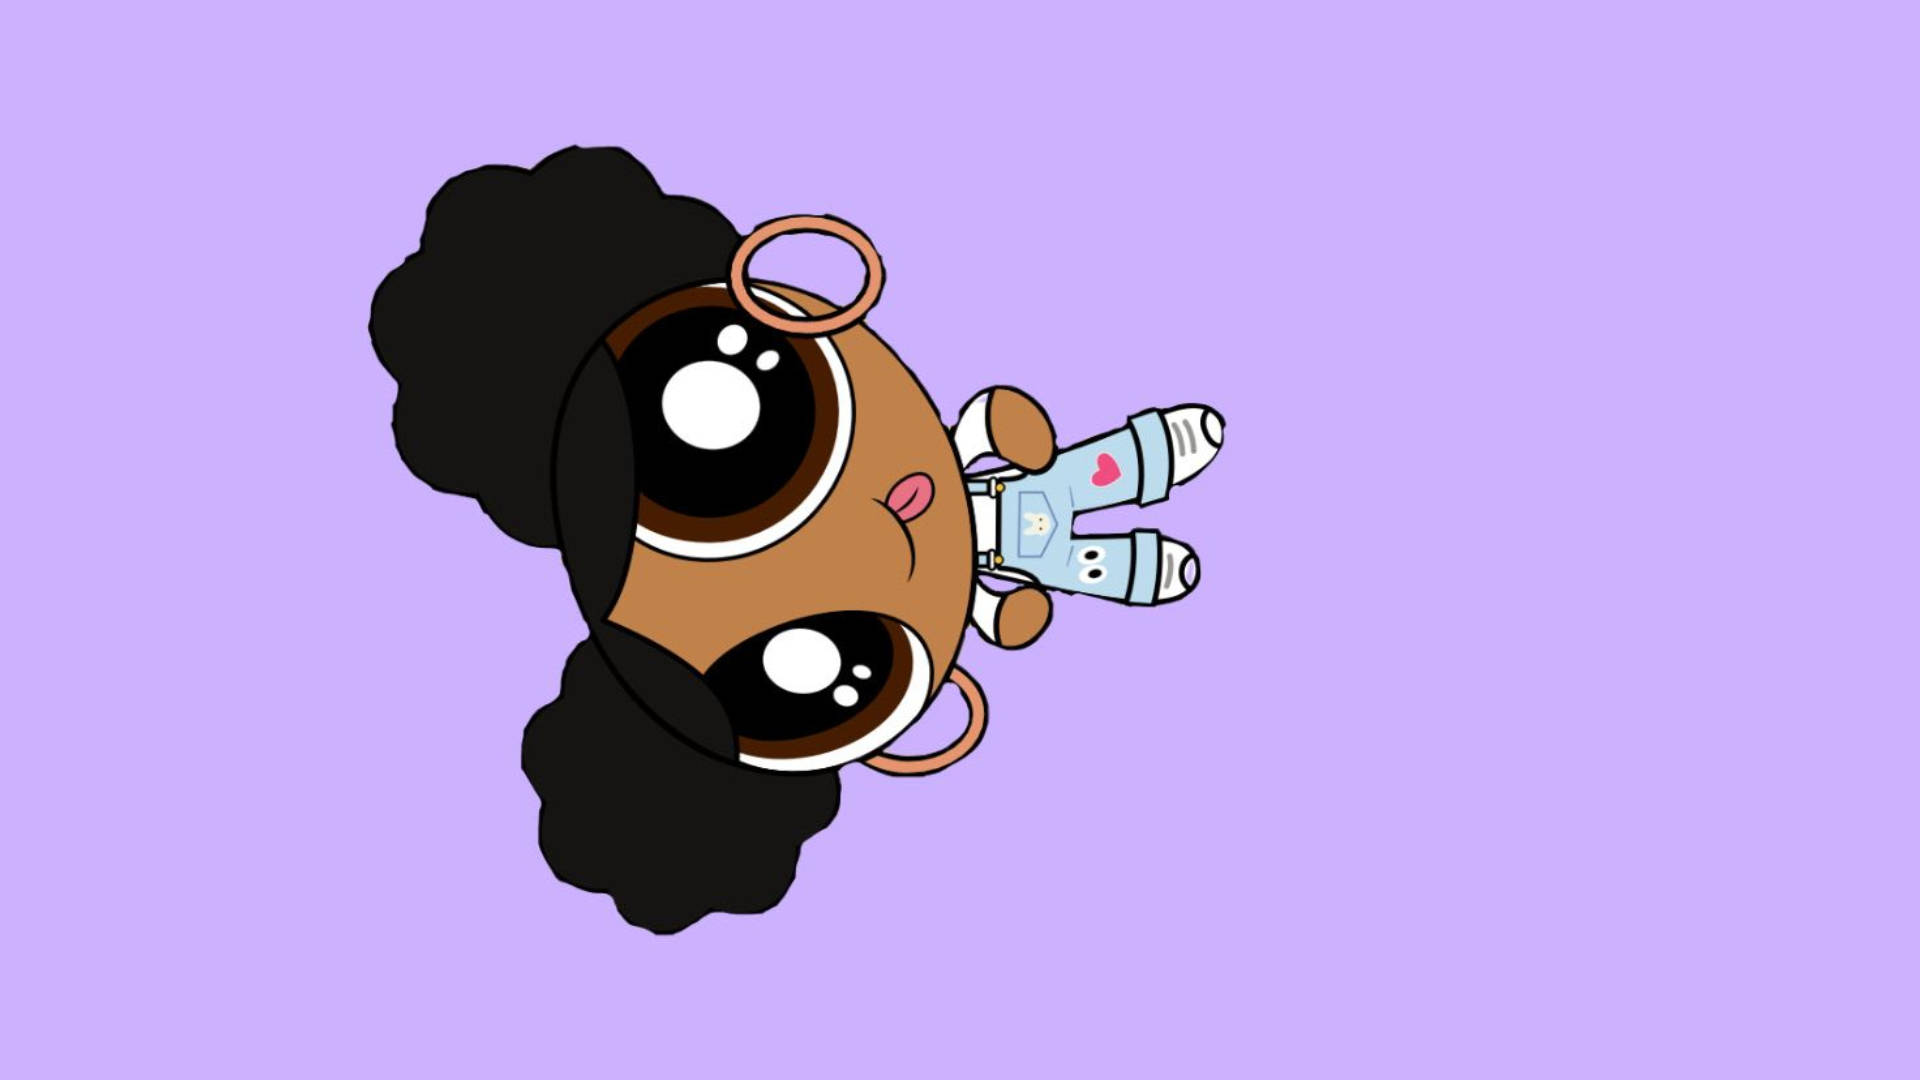 Free Black Cartoon Girl Wallpaper Downloads, Black Cartoon Girl Wallpaper for FREE